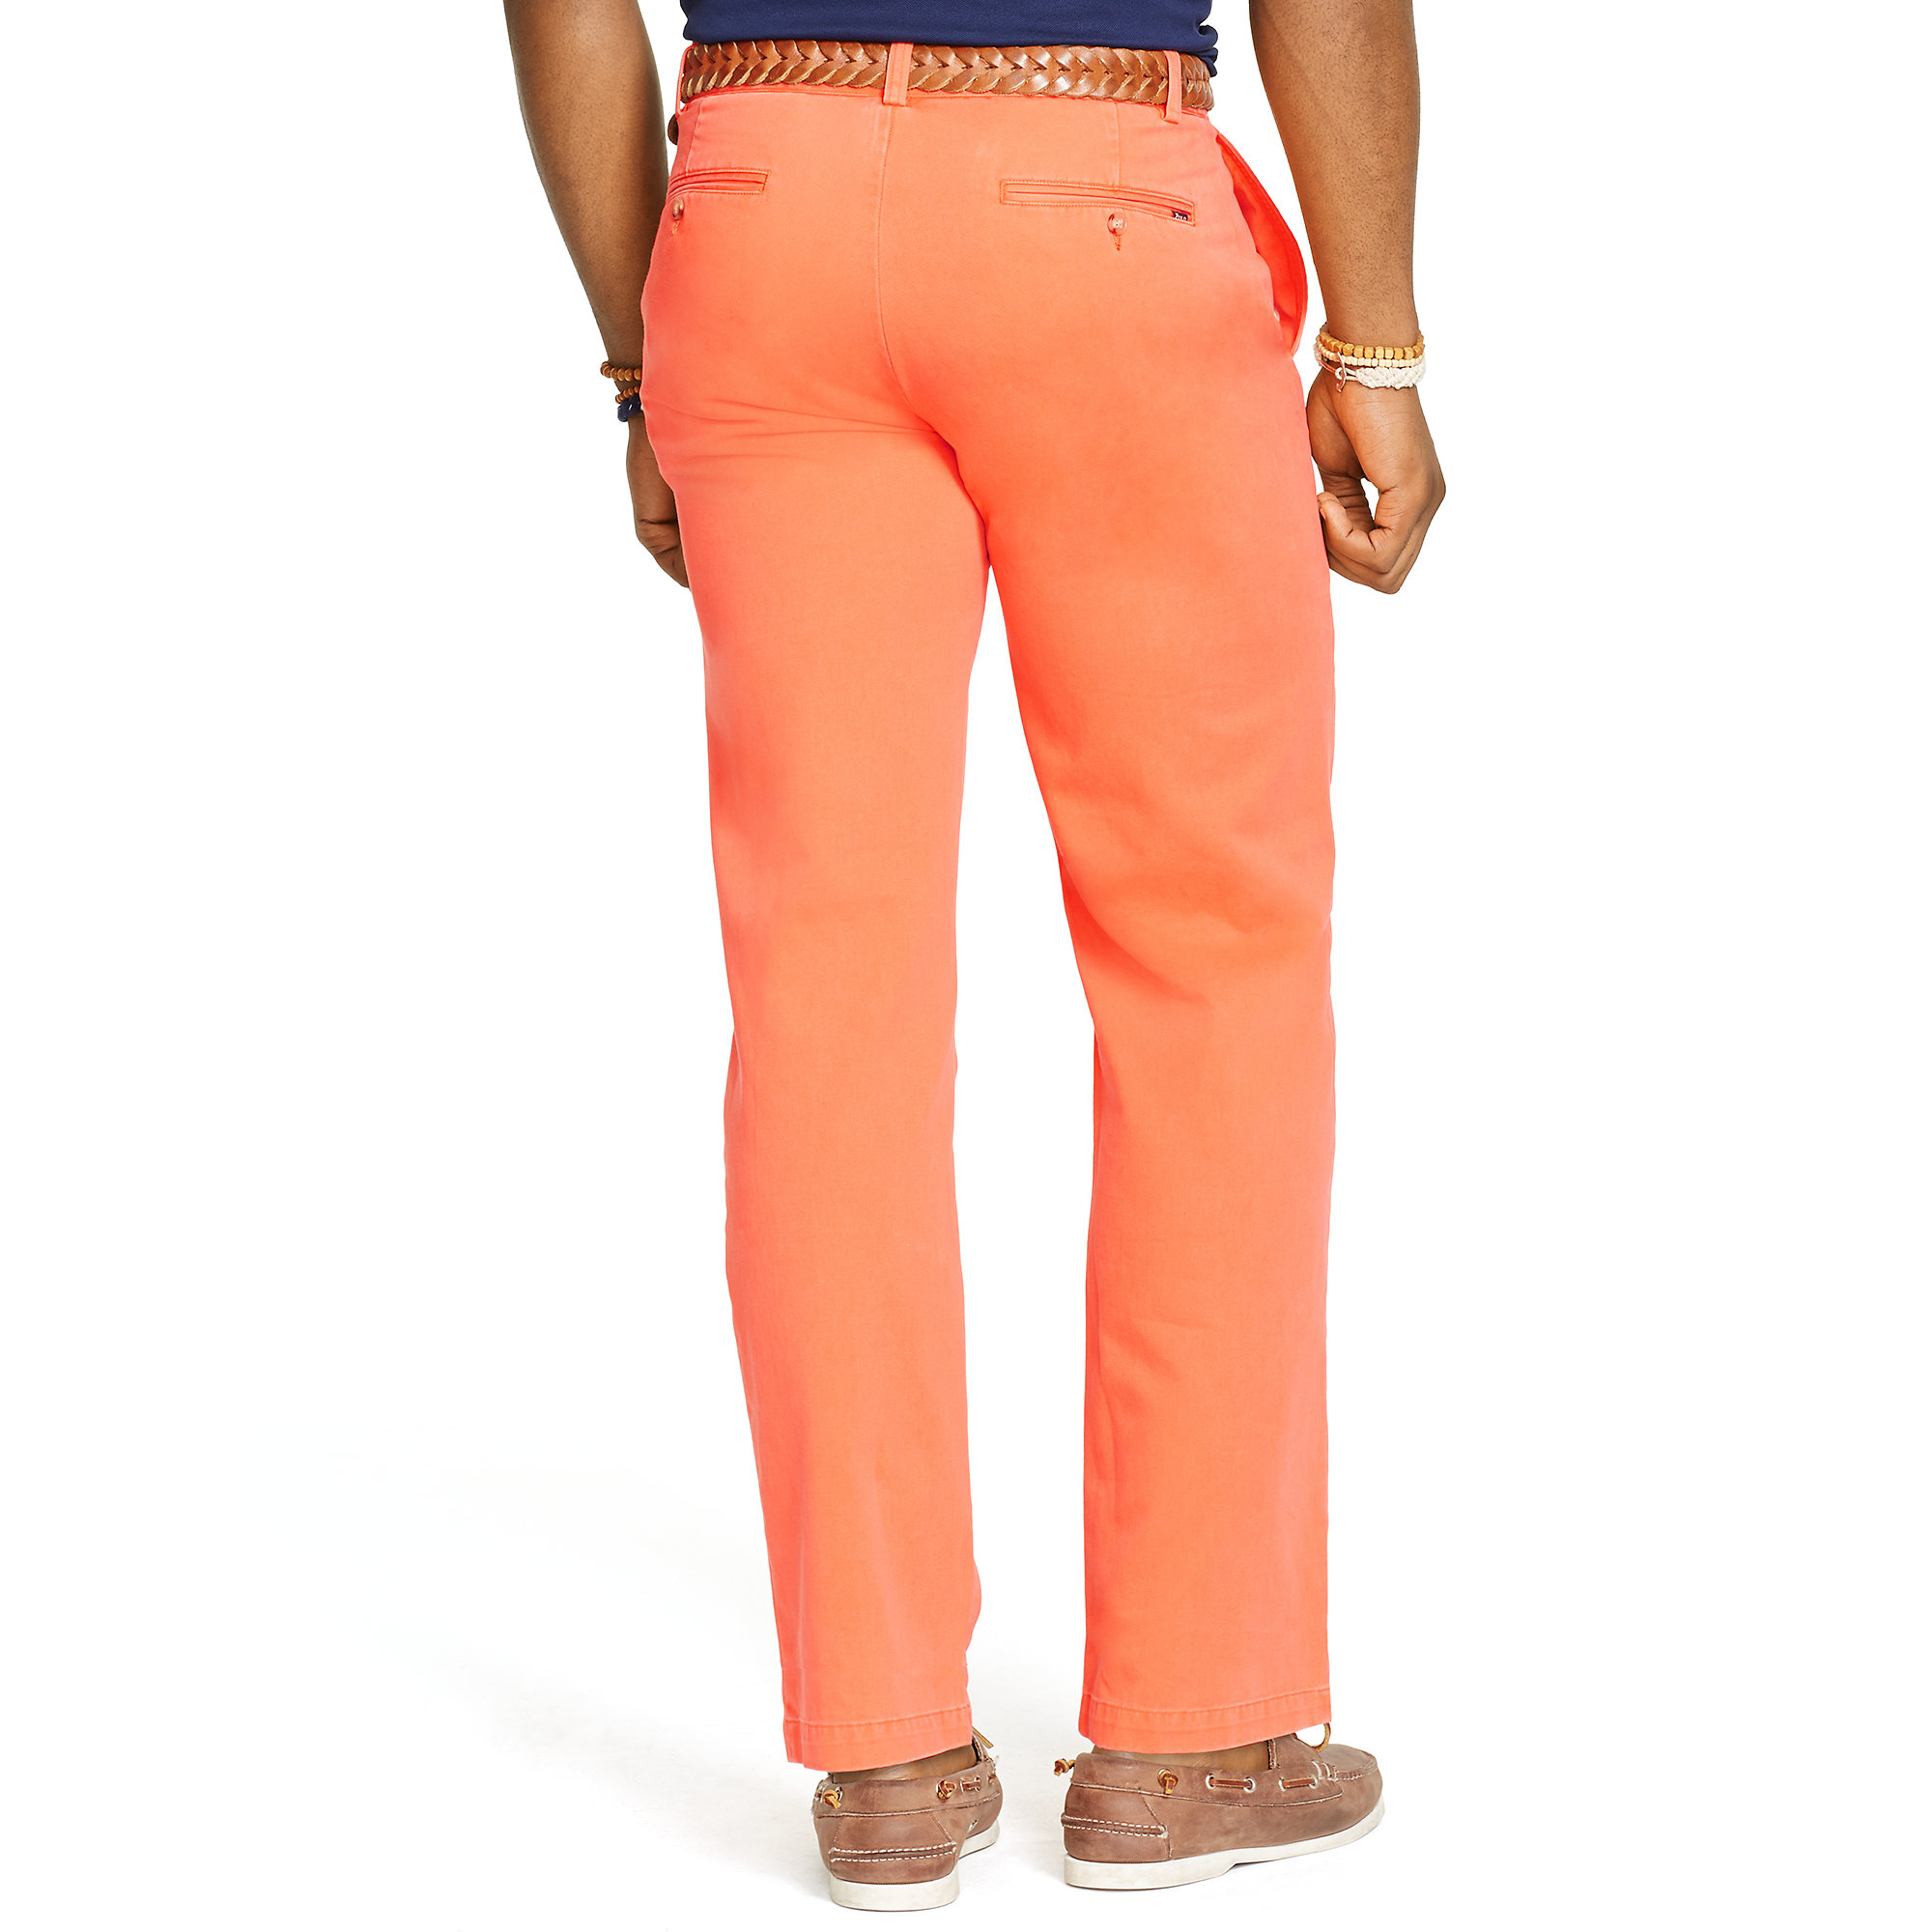 Ralph Lauren Classic-Fit Chino in Orange for Men - Lyst